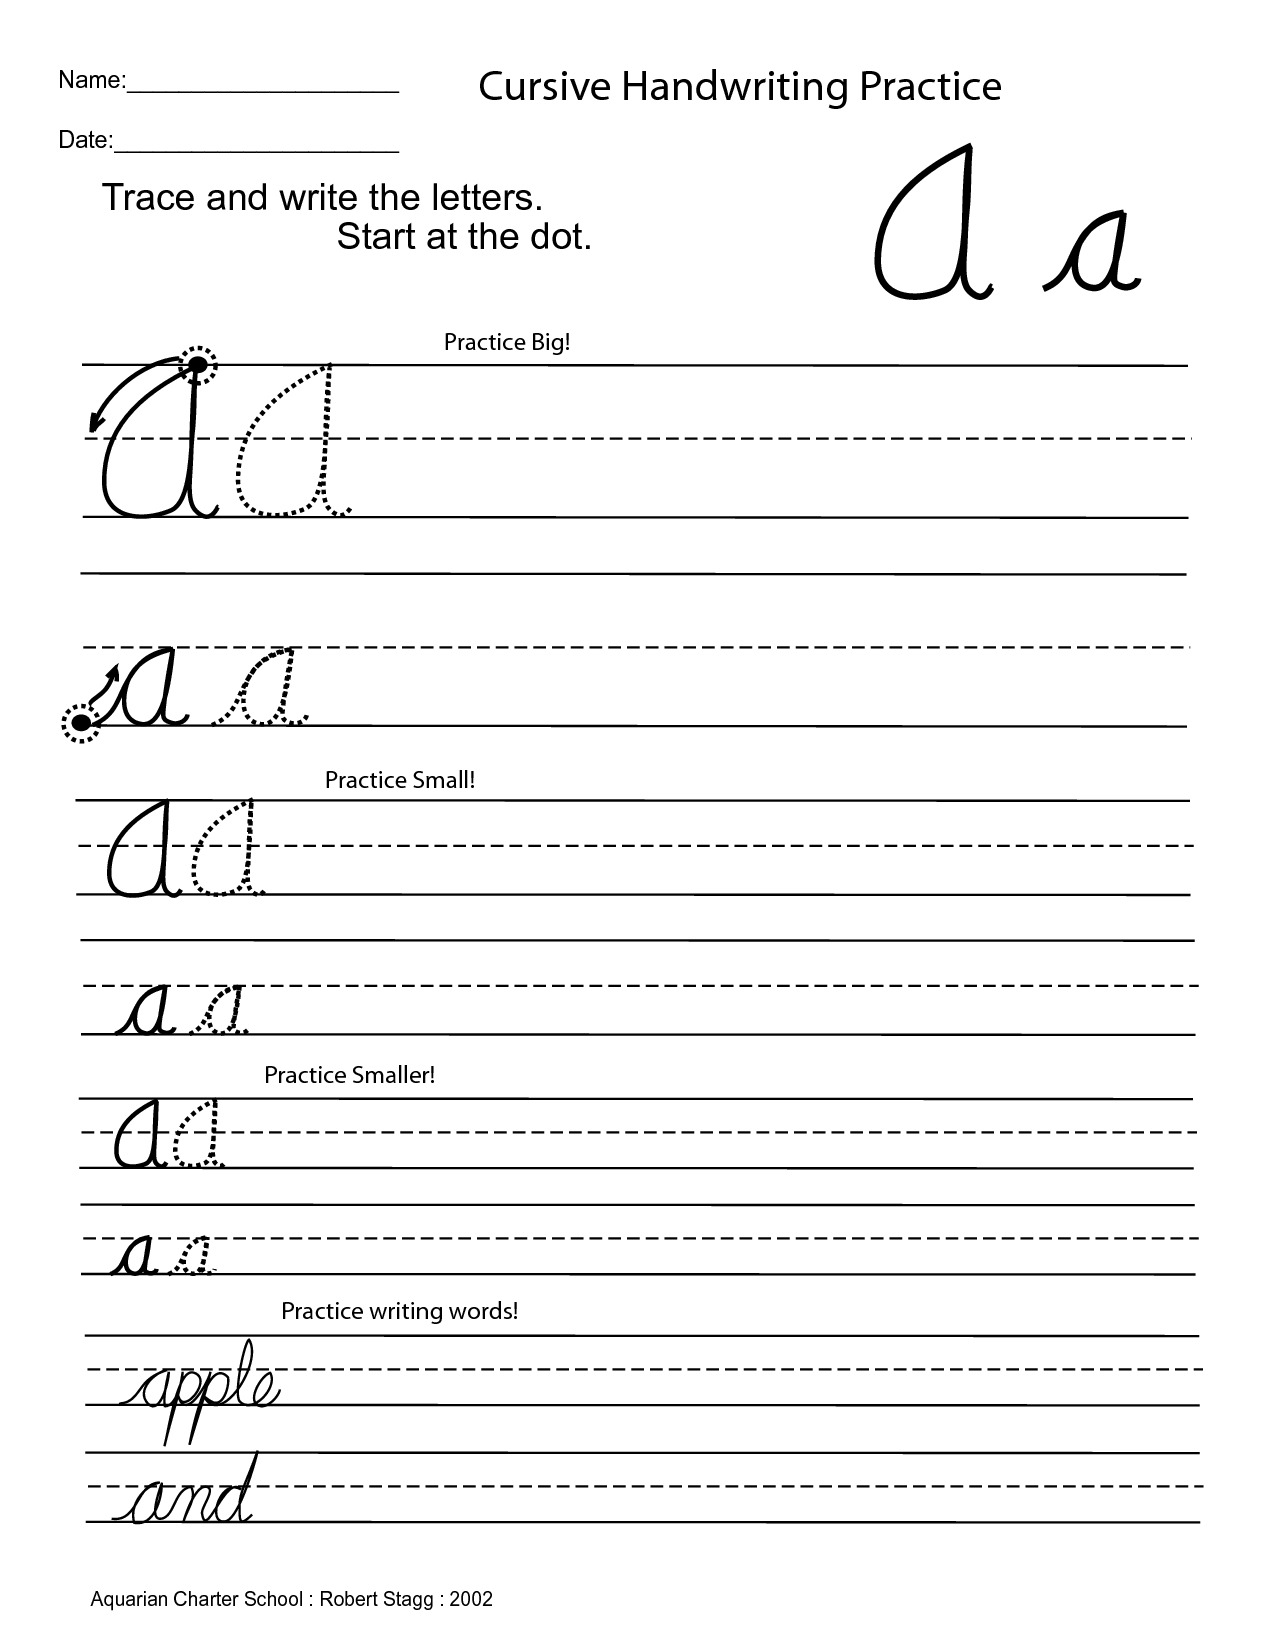 Trace Cursive Letters Worksheet Image